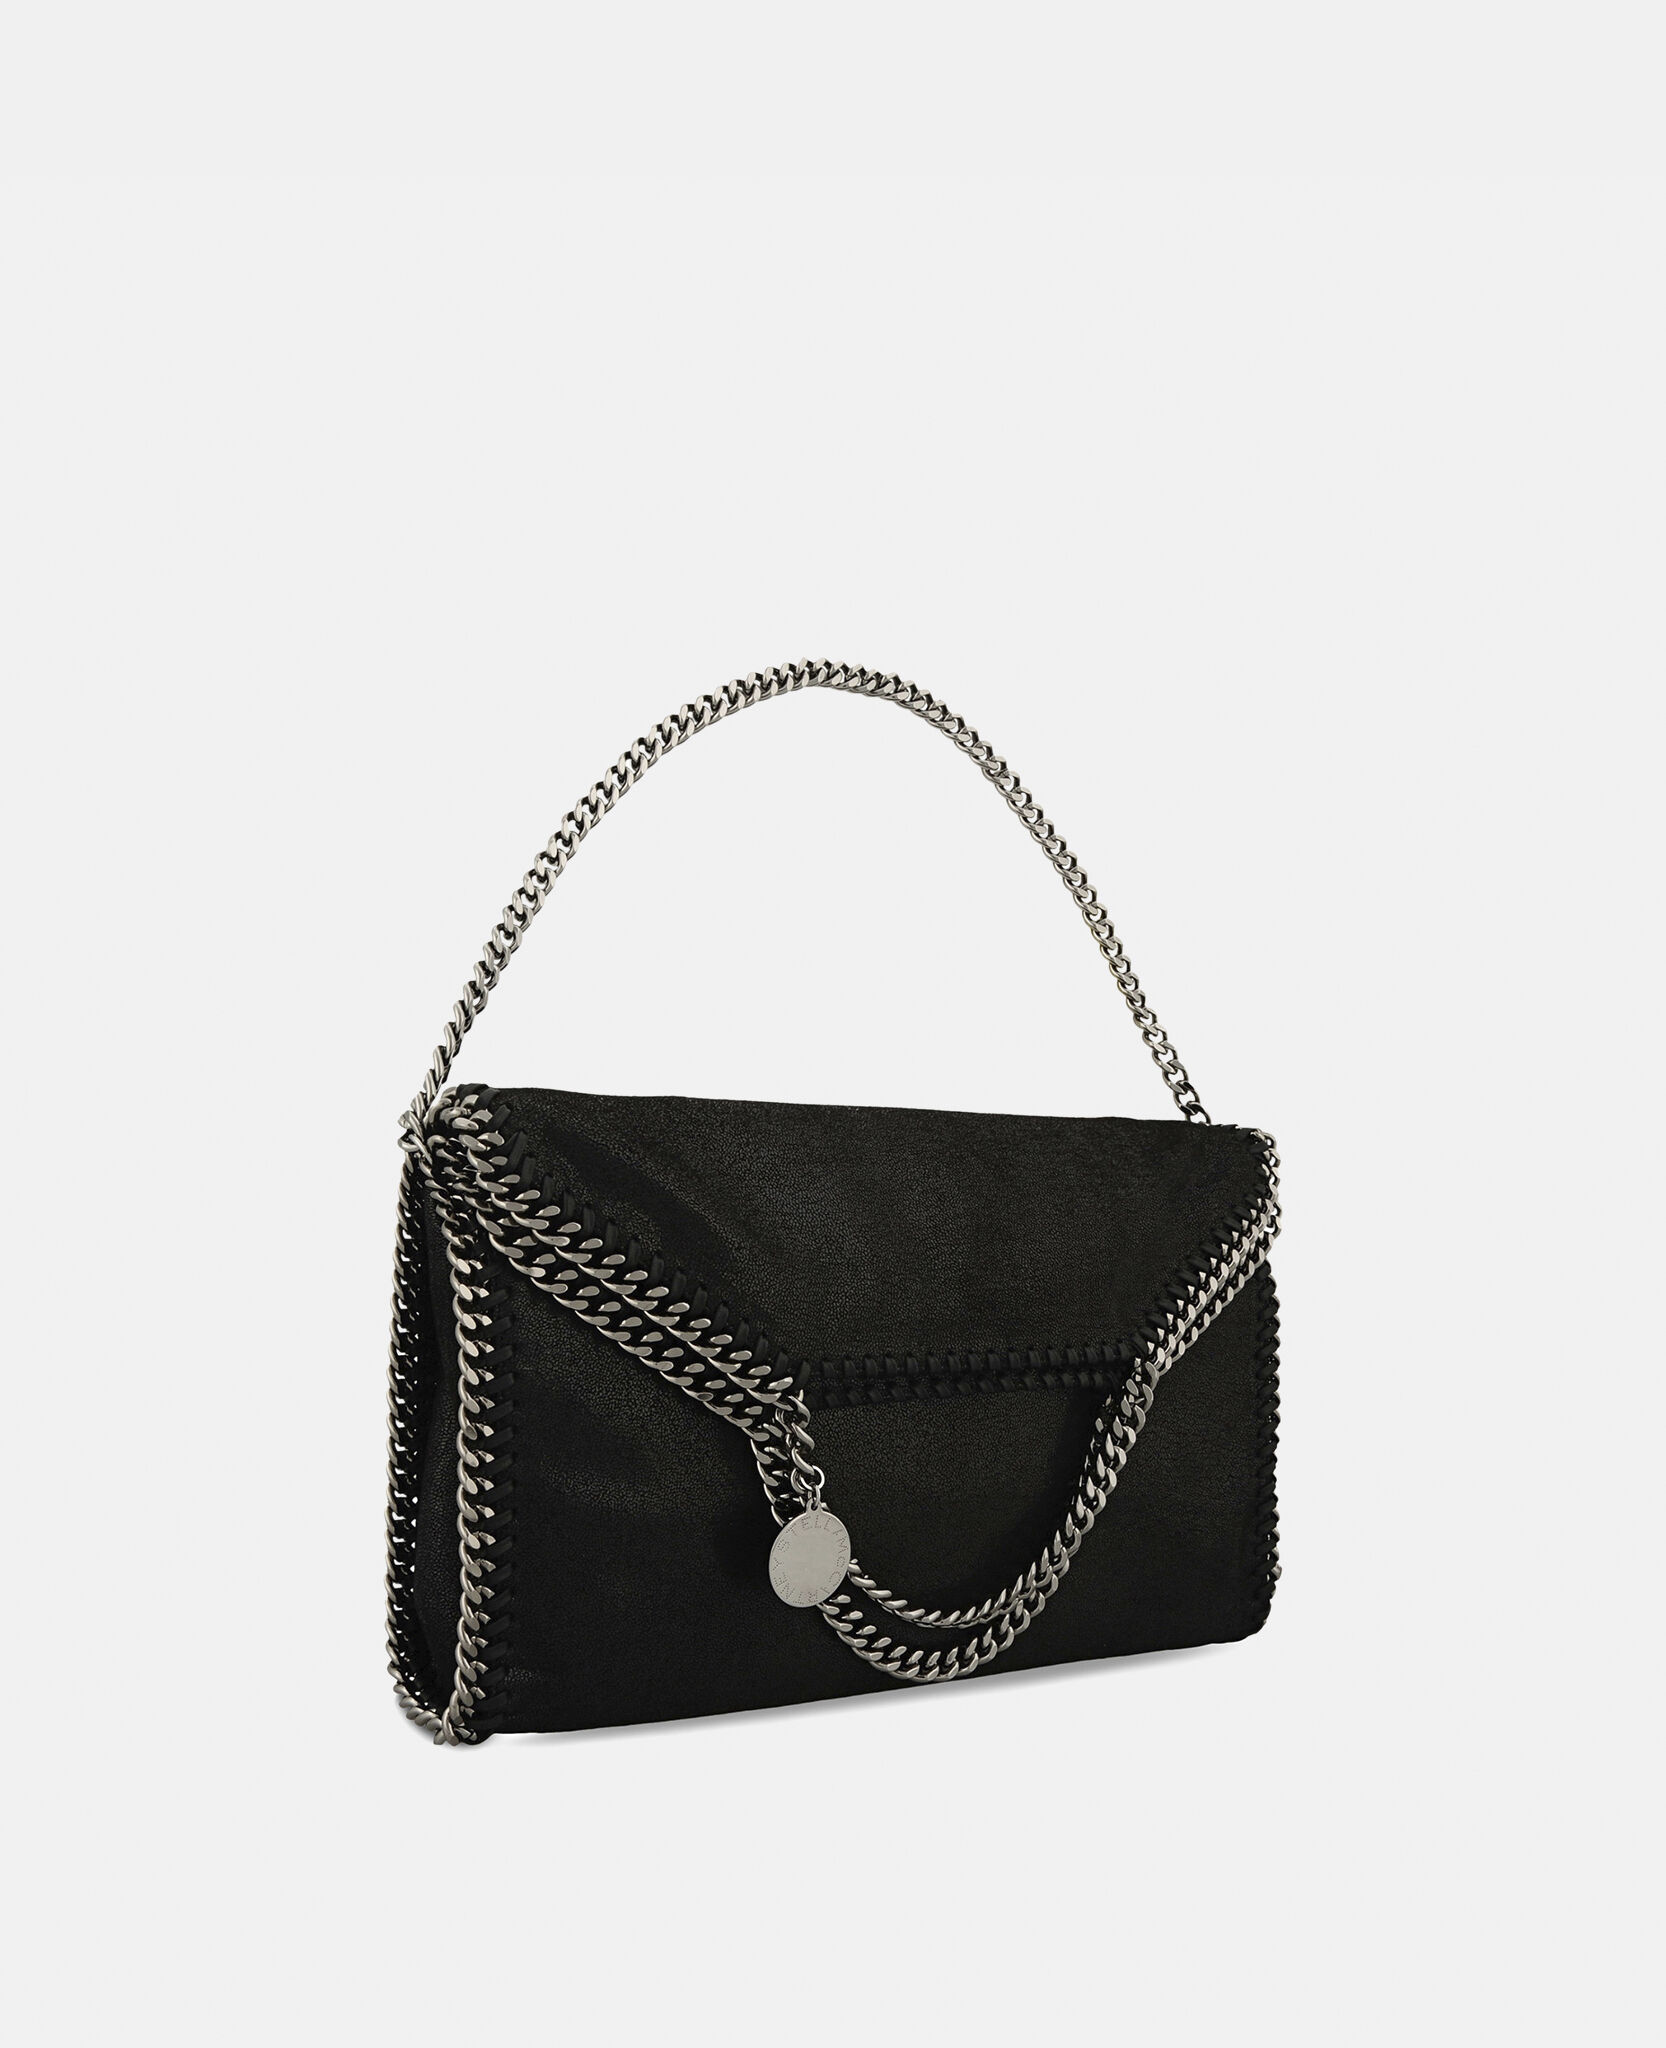 Women's Tote Handbags & Purses | Stella McCartney US